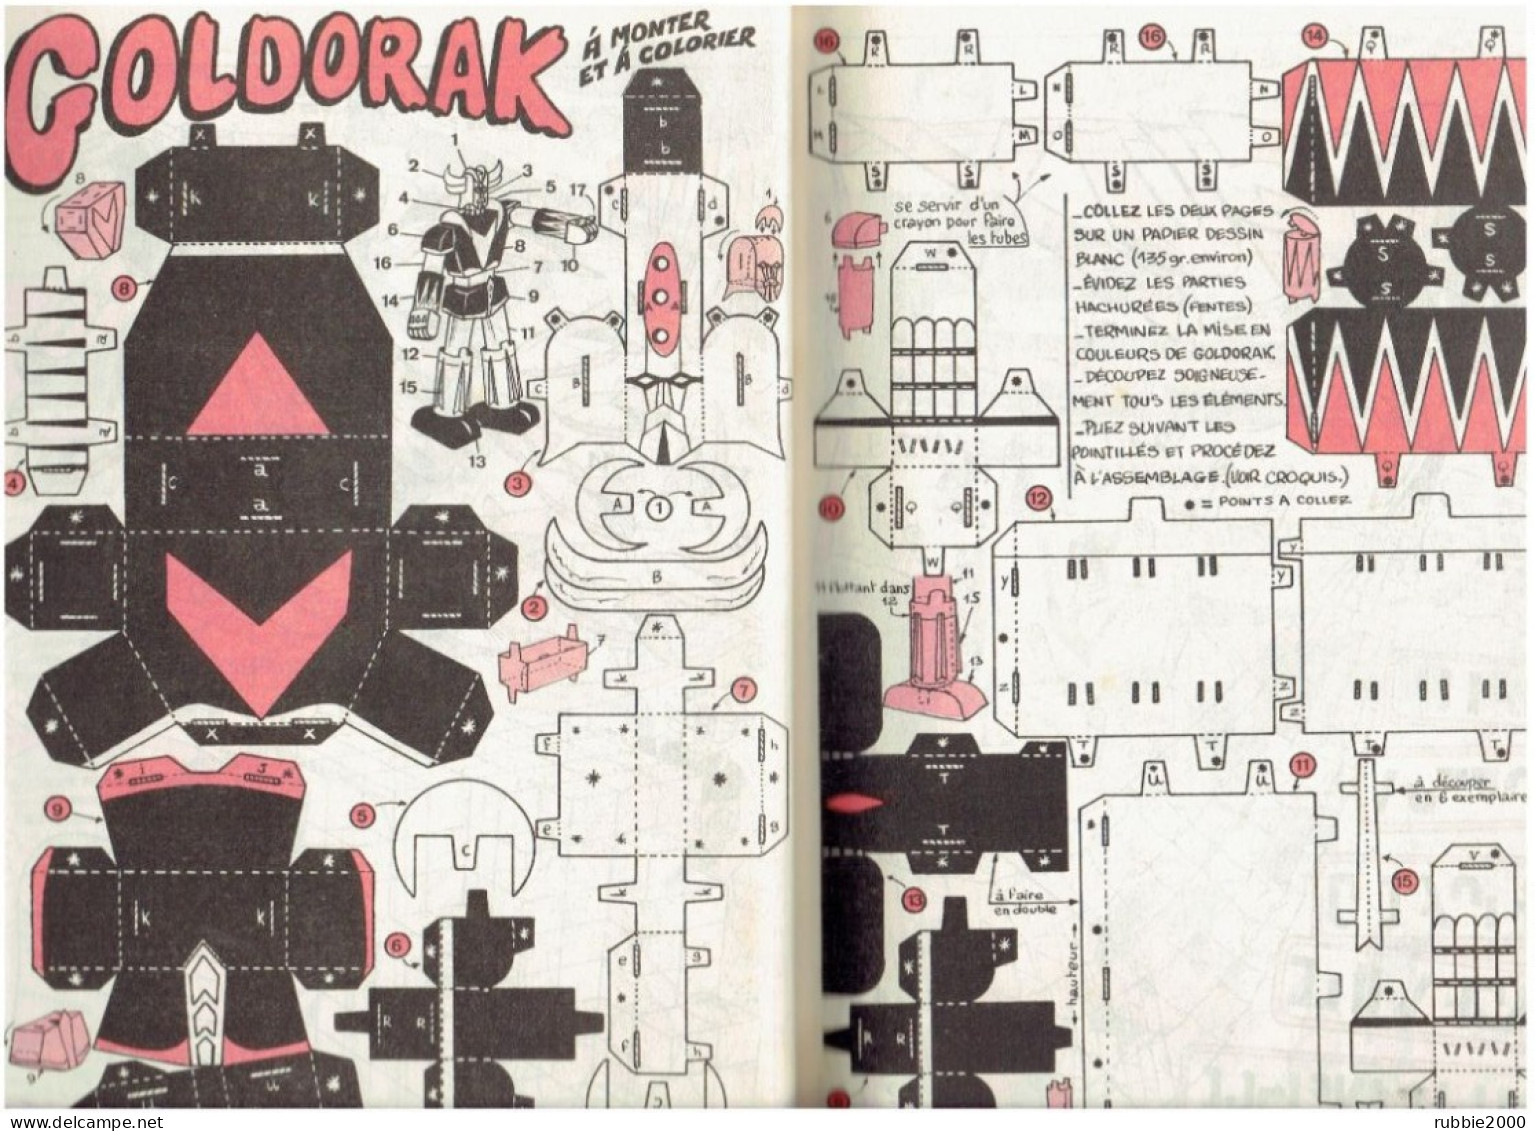 TELE JUNIOR ALMANACH 1980 GOLDORAK 1 GOLDORAK A CONSTRUIRE 2 HISTOIRES ET 2 JEUX GOLDORAK - Other Magazines